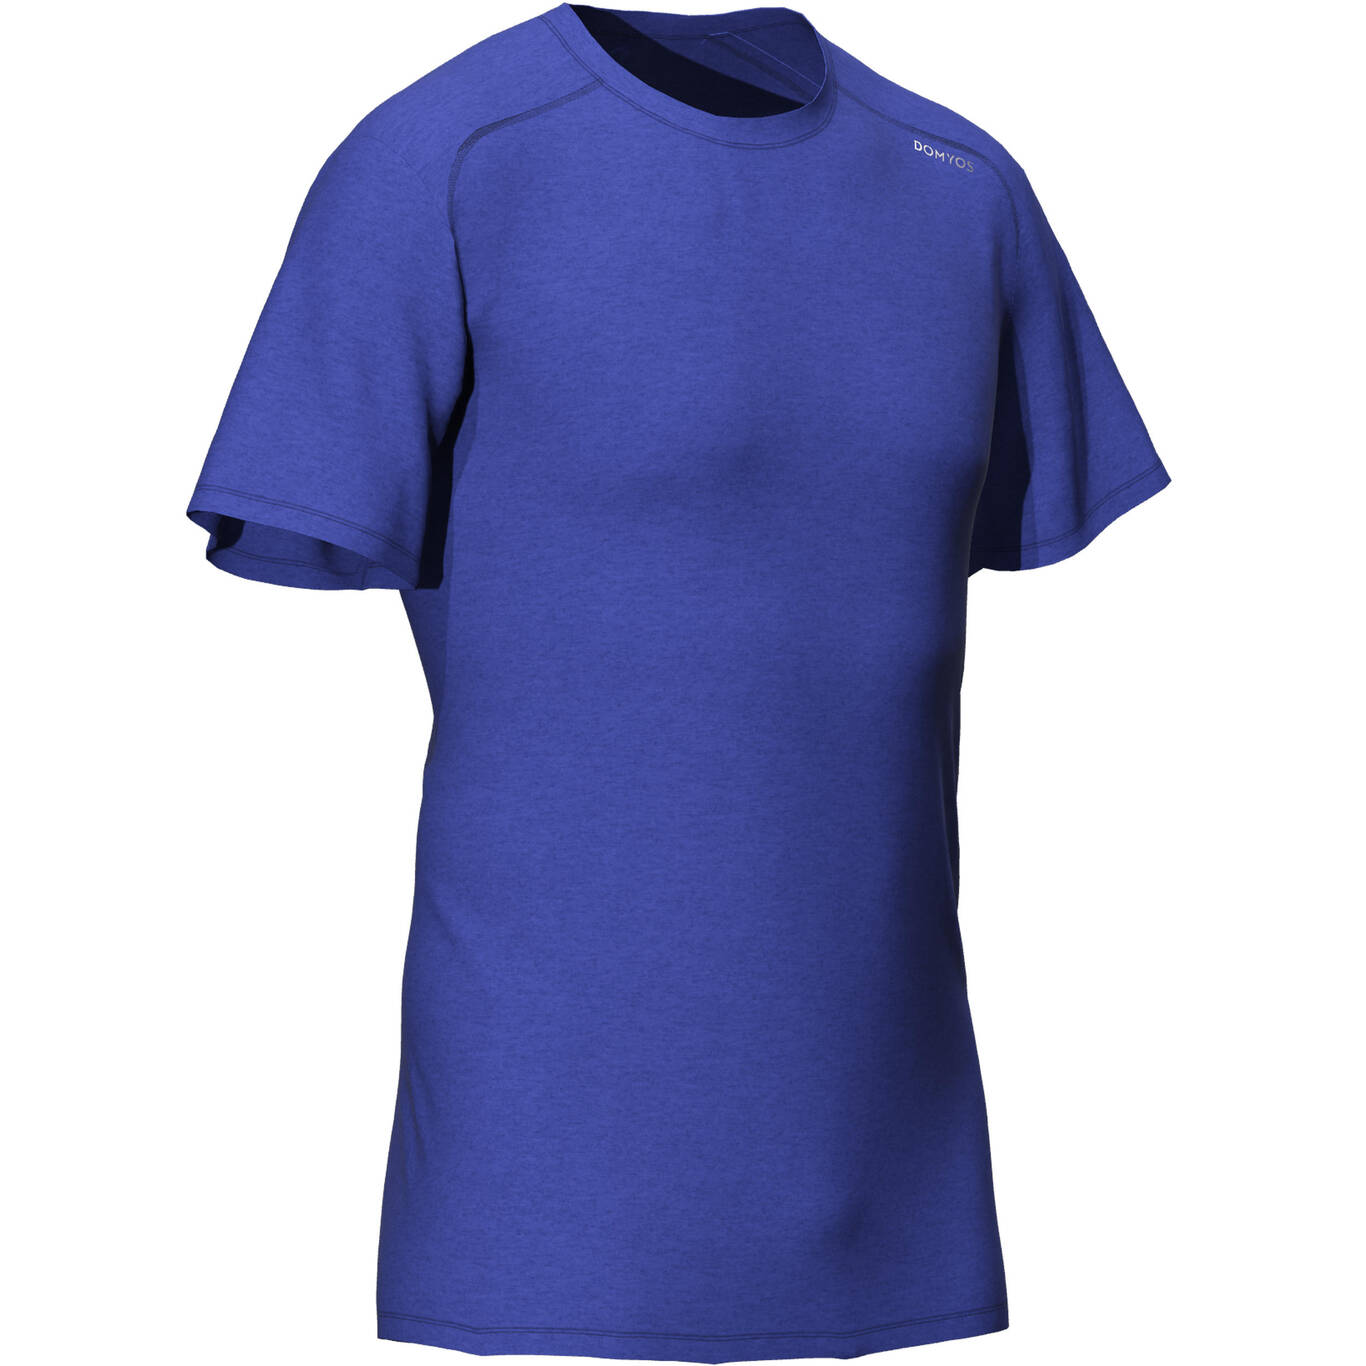 Men's Crew Neck Breathable Essential Fitness T-Shirt - Mottled Blue